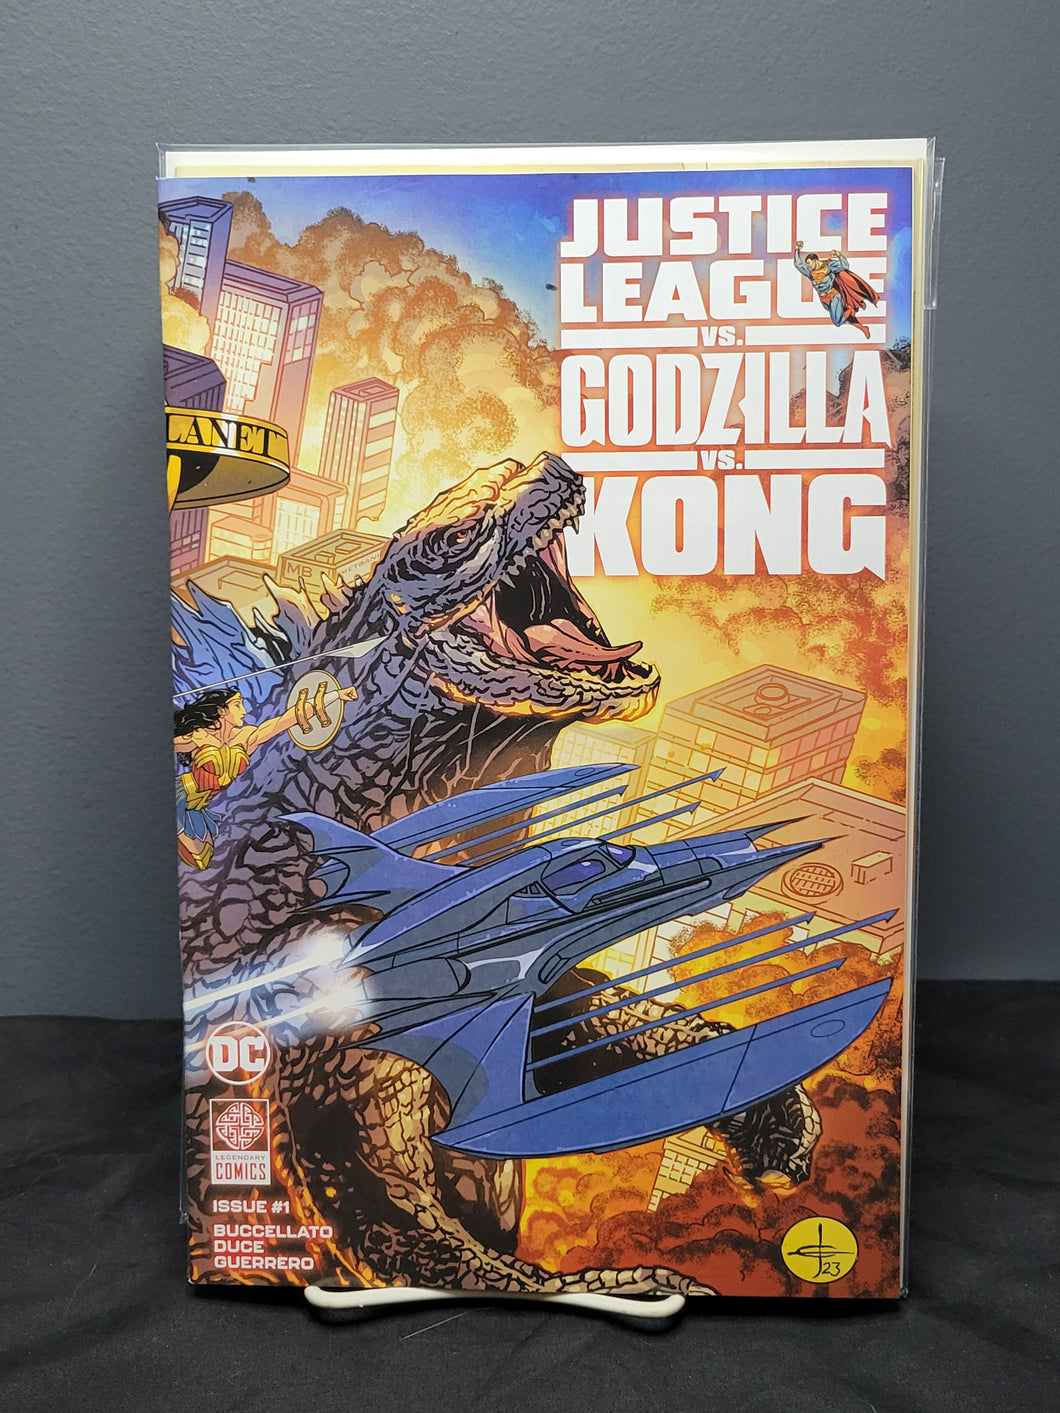 Justice League Vs Godzilla Vs Kong #1